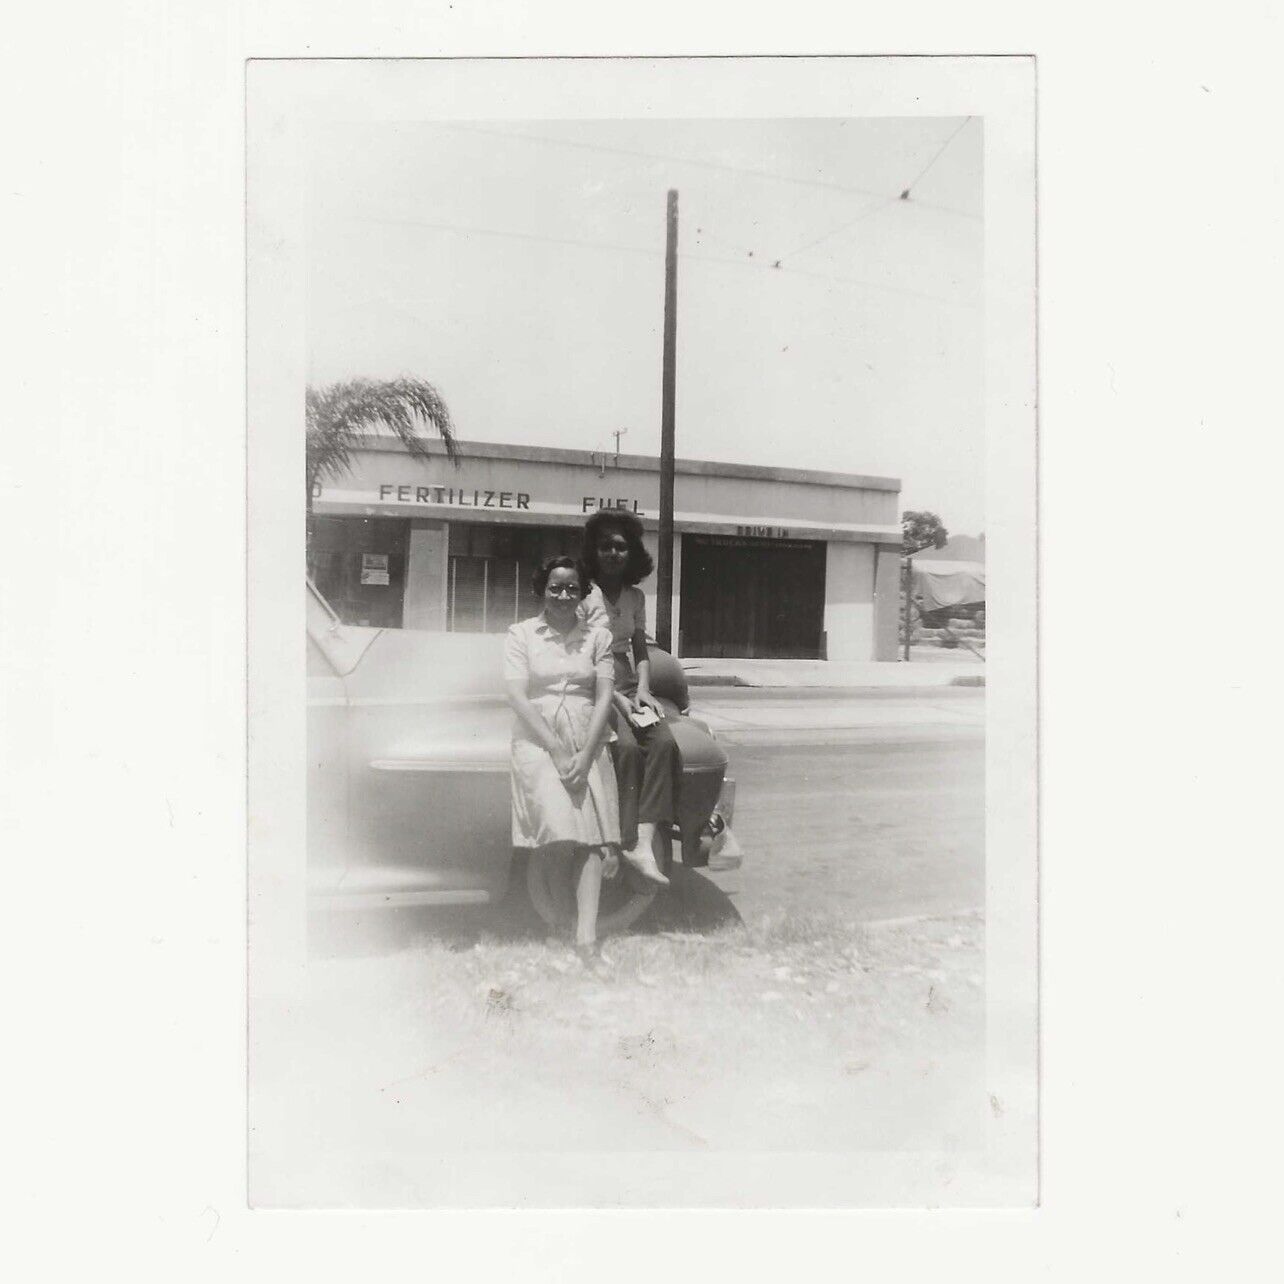 Two Women Sitting On Car Fertilizer Fuel Gas Station 1940s WWII Era Photo